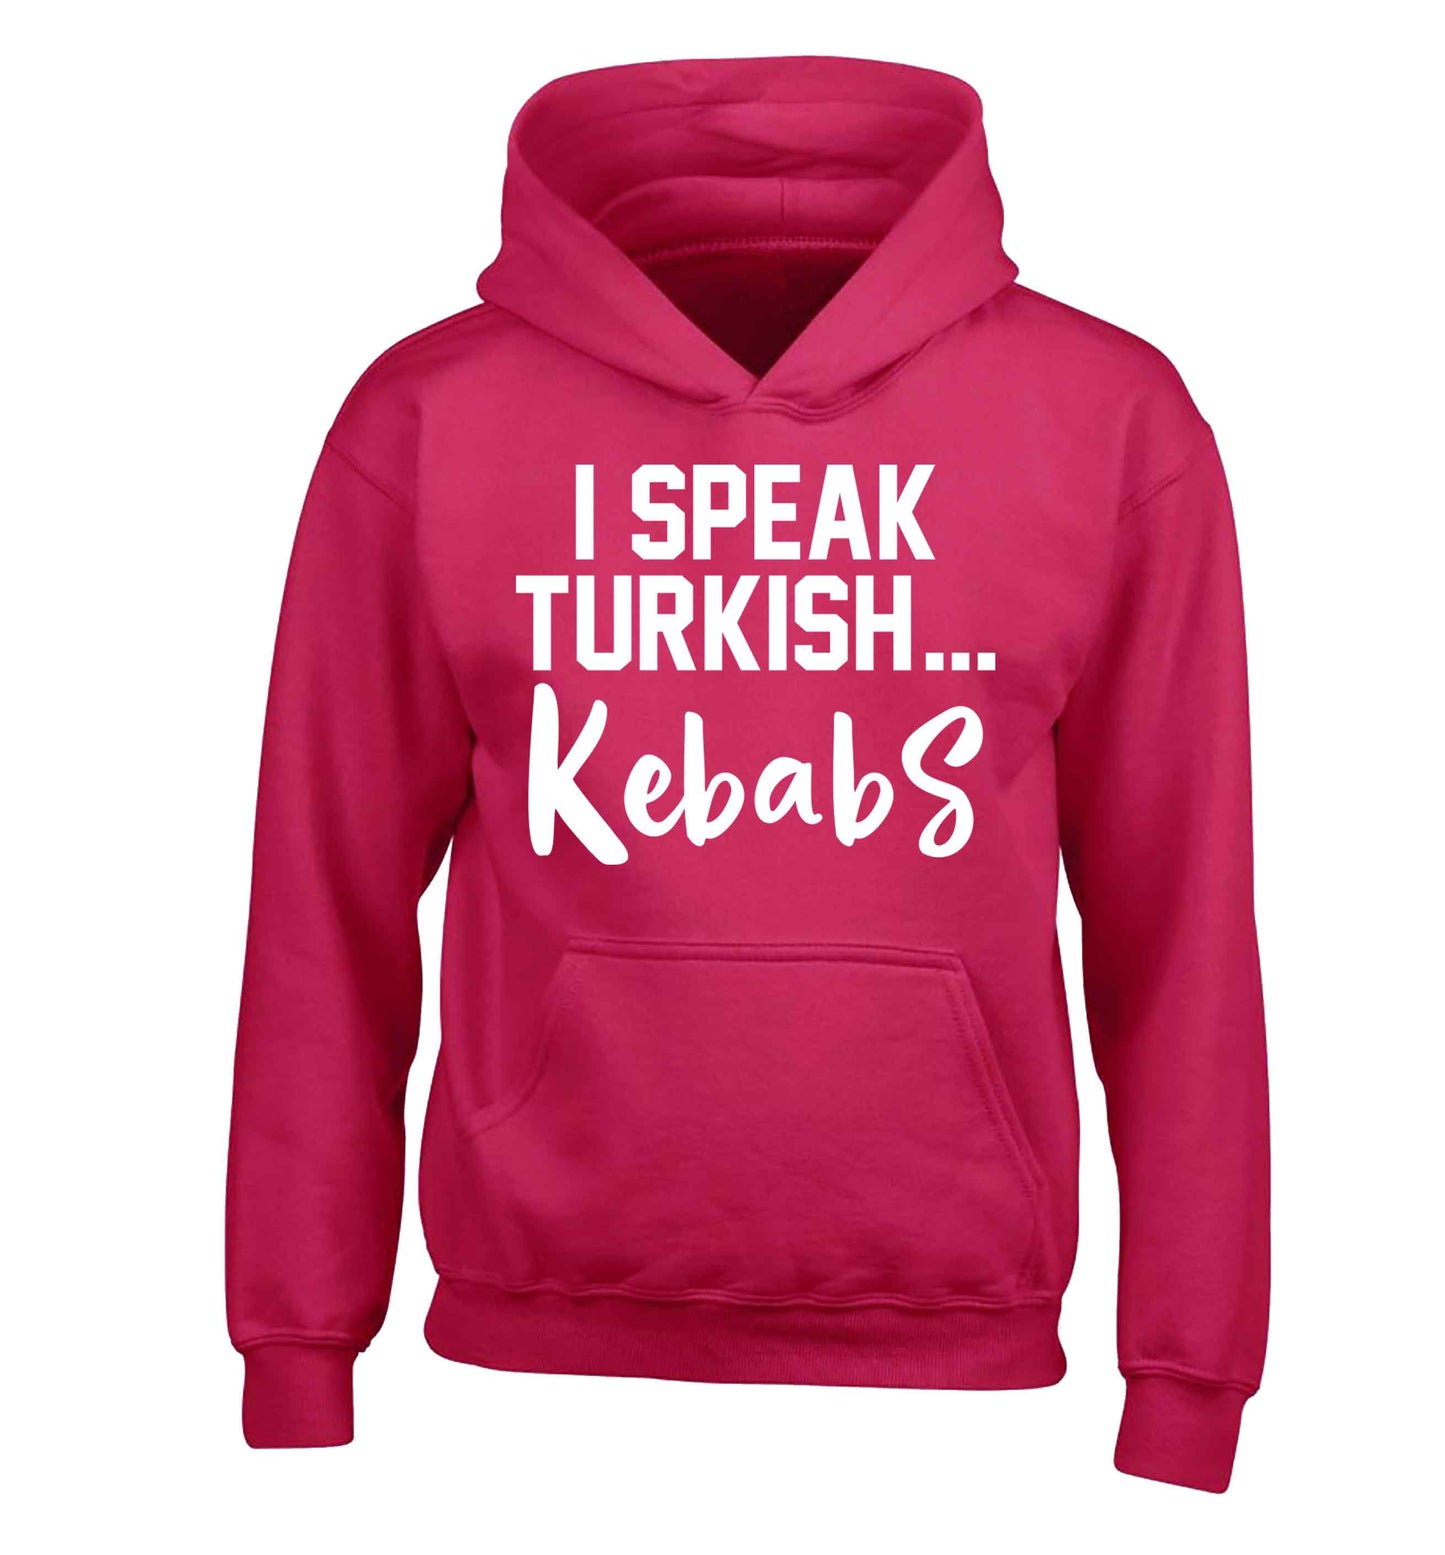 I speak Turkish...kebabs children's pink hoodie 12-13 Years